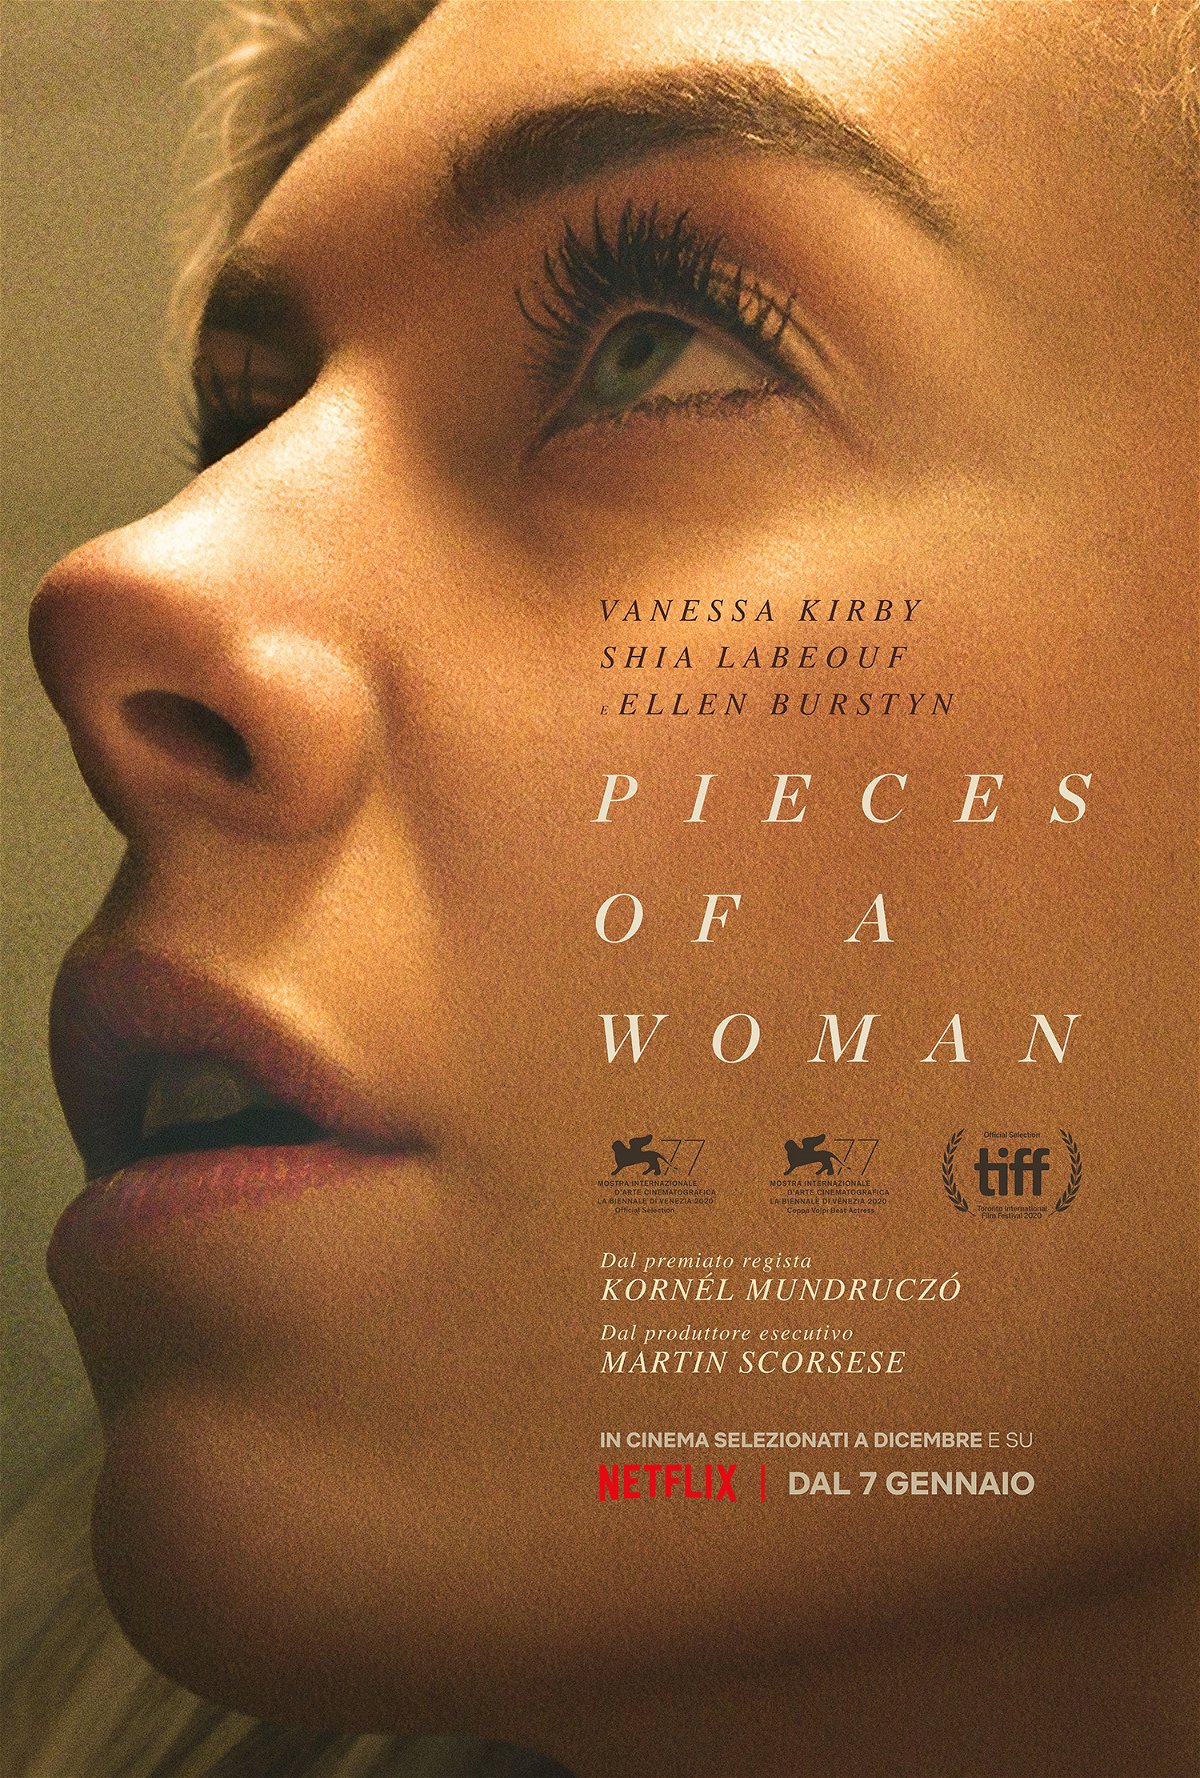 Il poster del film Pieces of a Woman